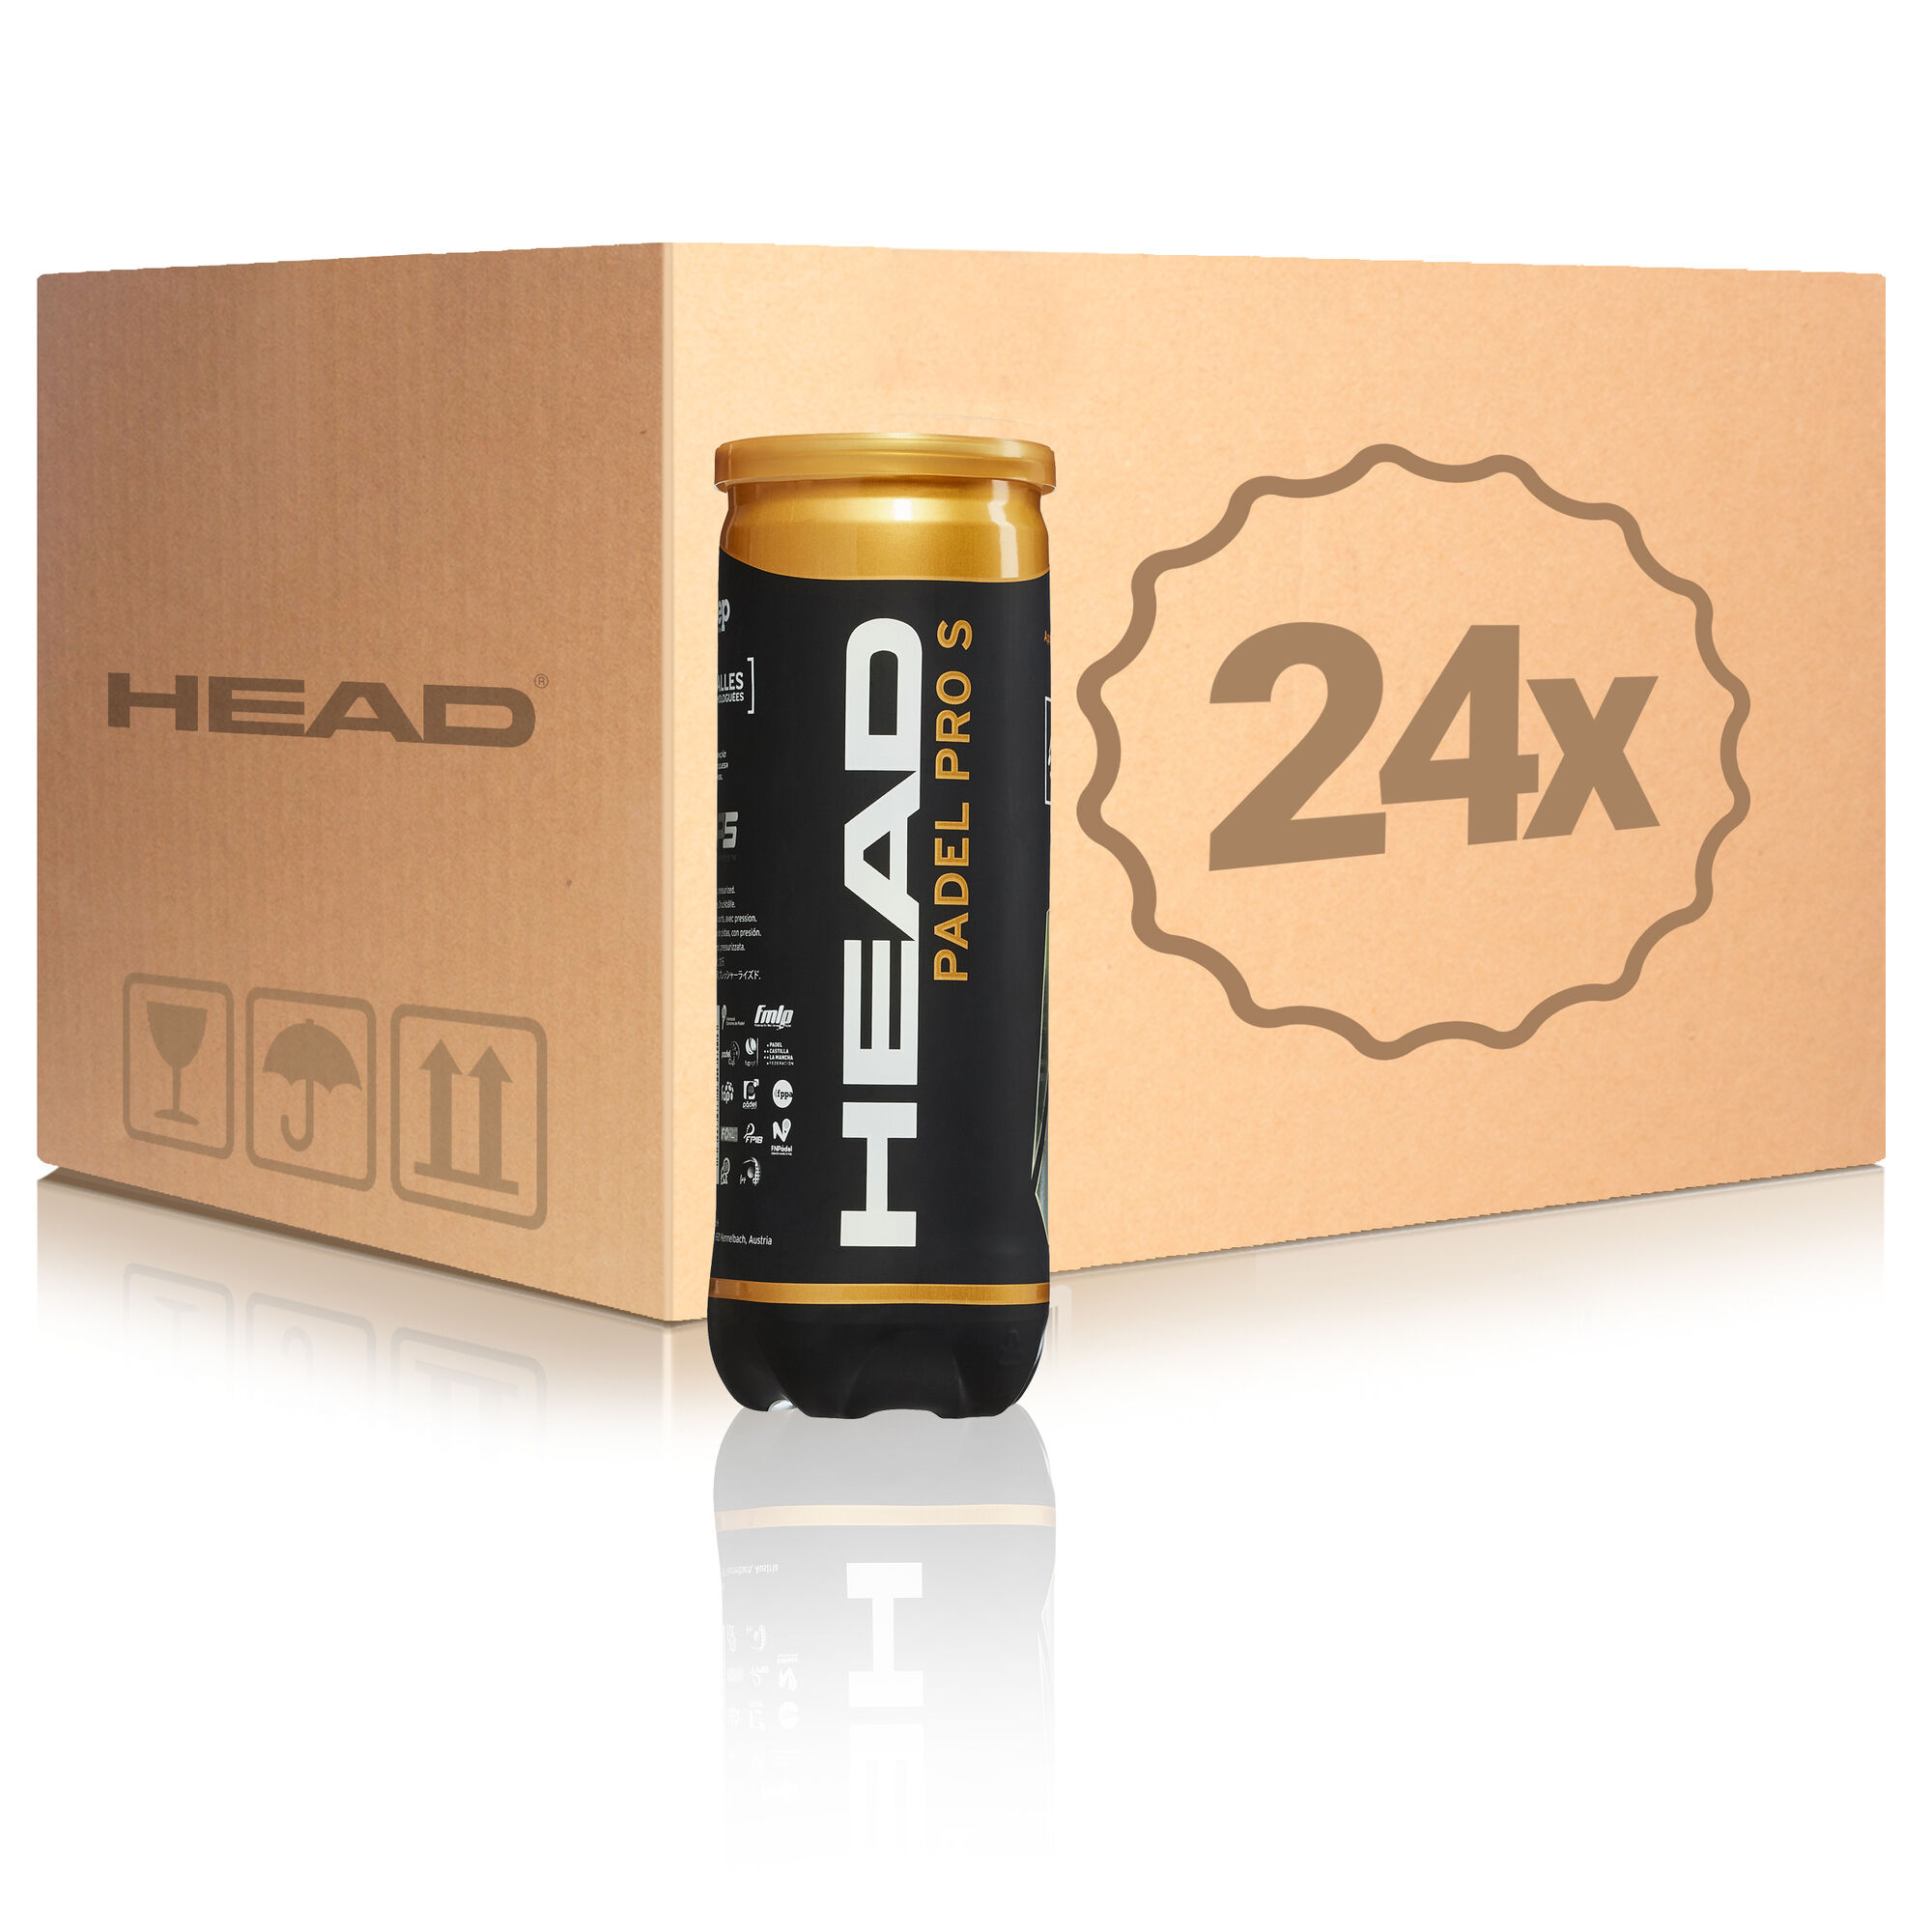 Buy HEAD Padel Pro S 24 Botes De 3 Pelotas En Caja online